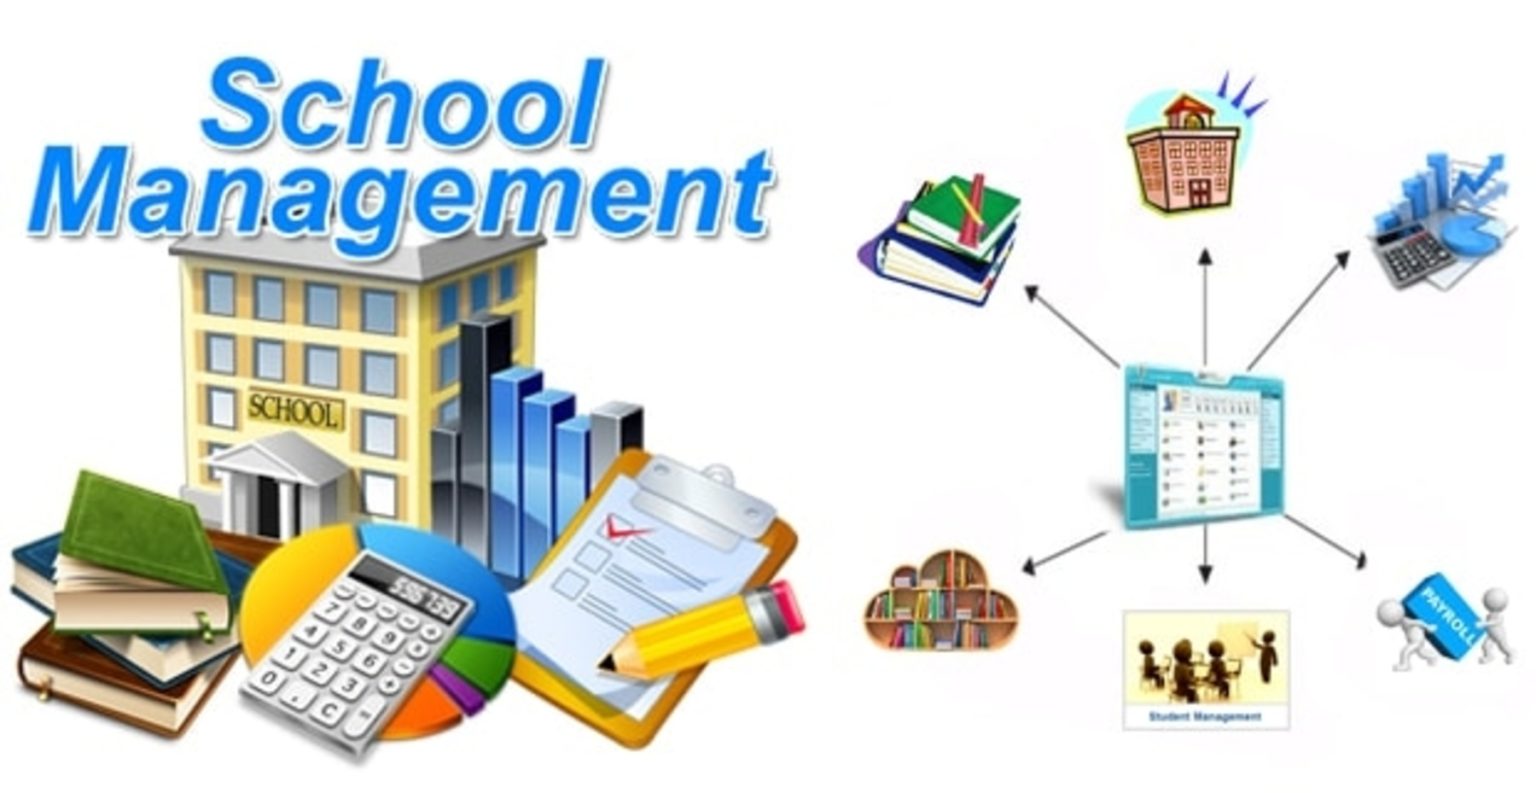 project topics under educational management